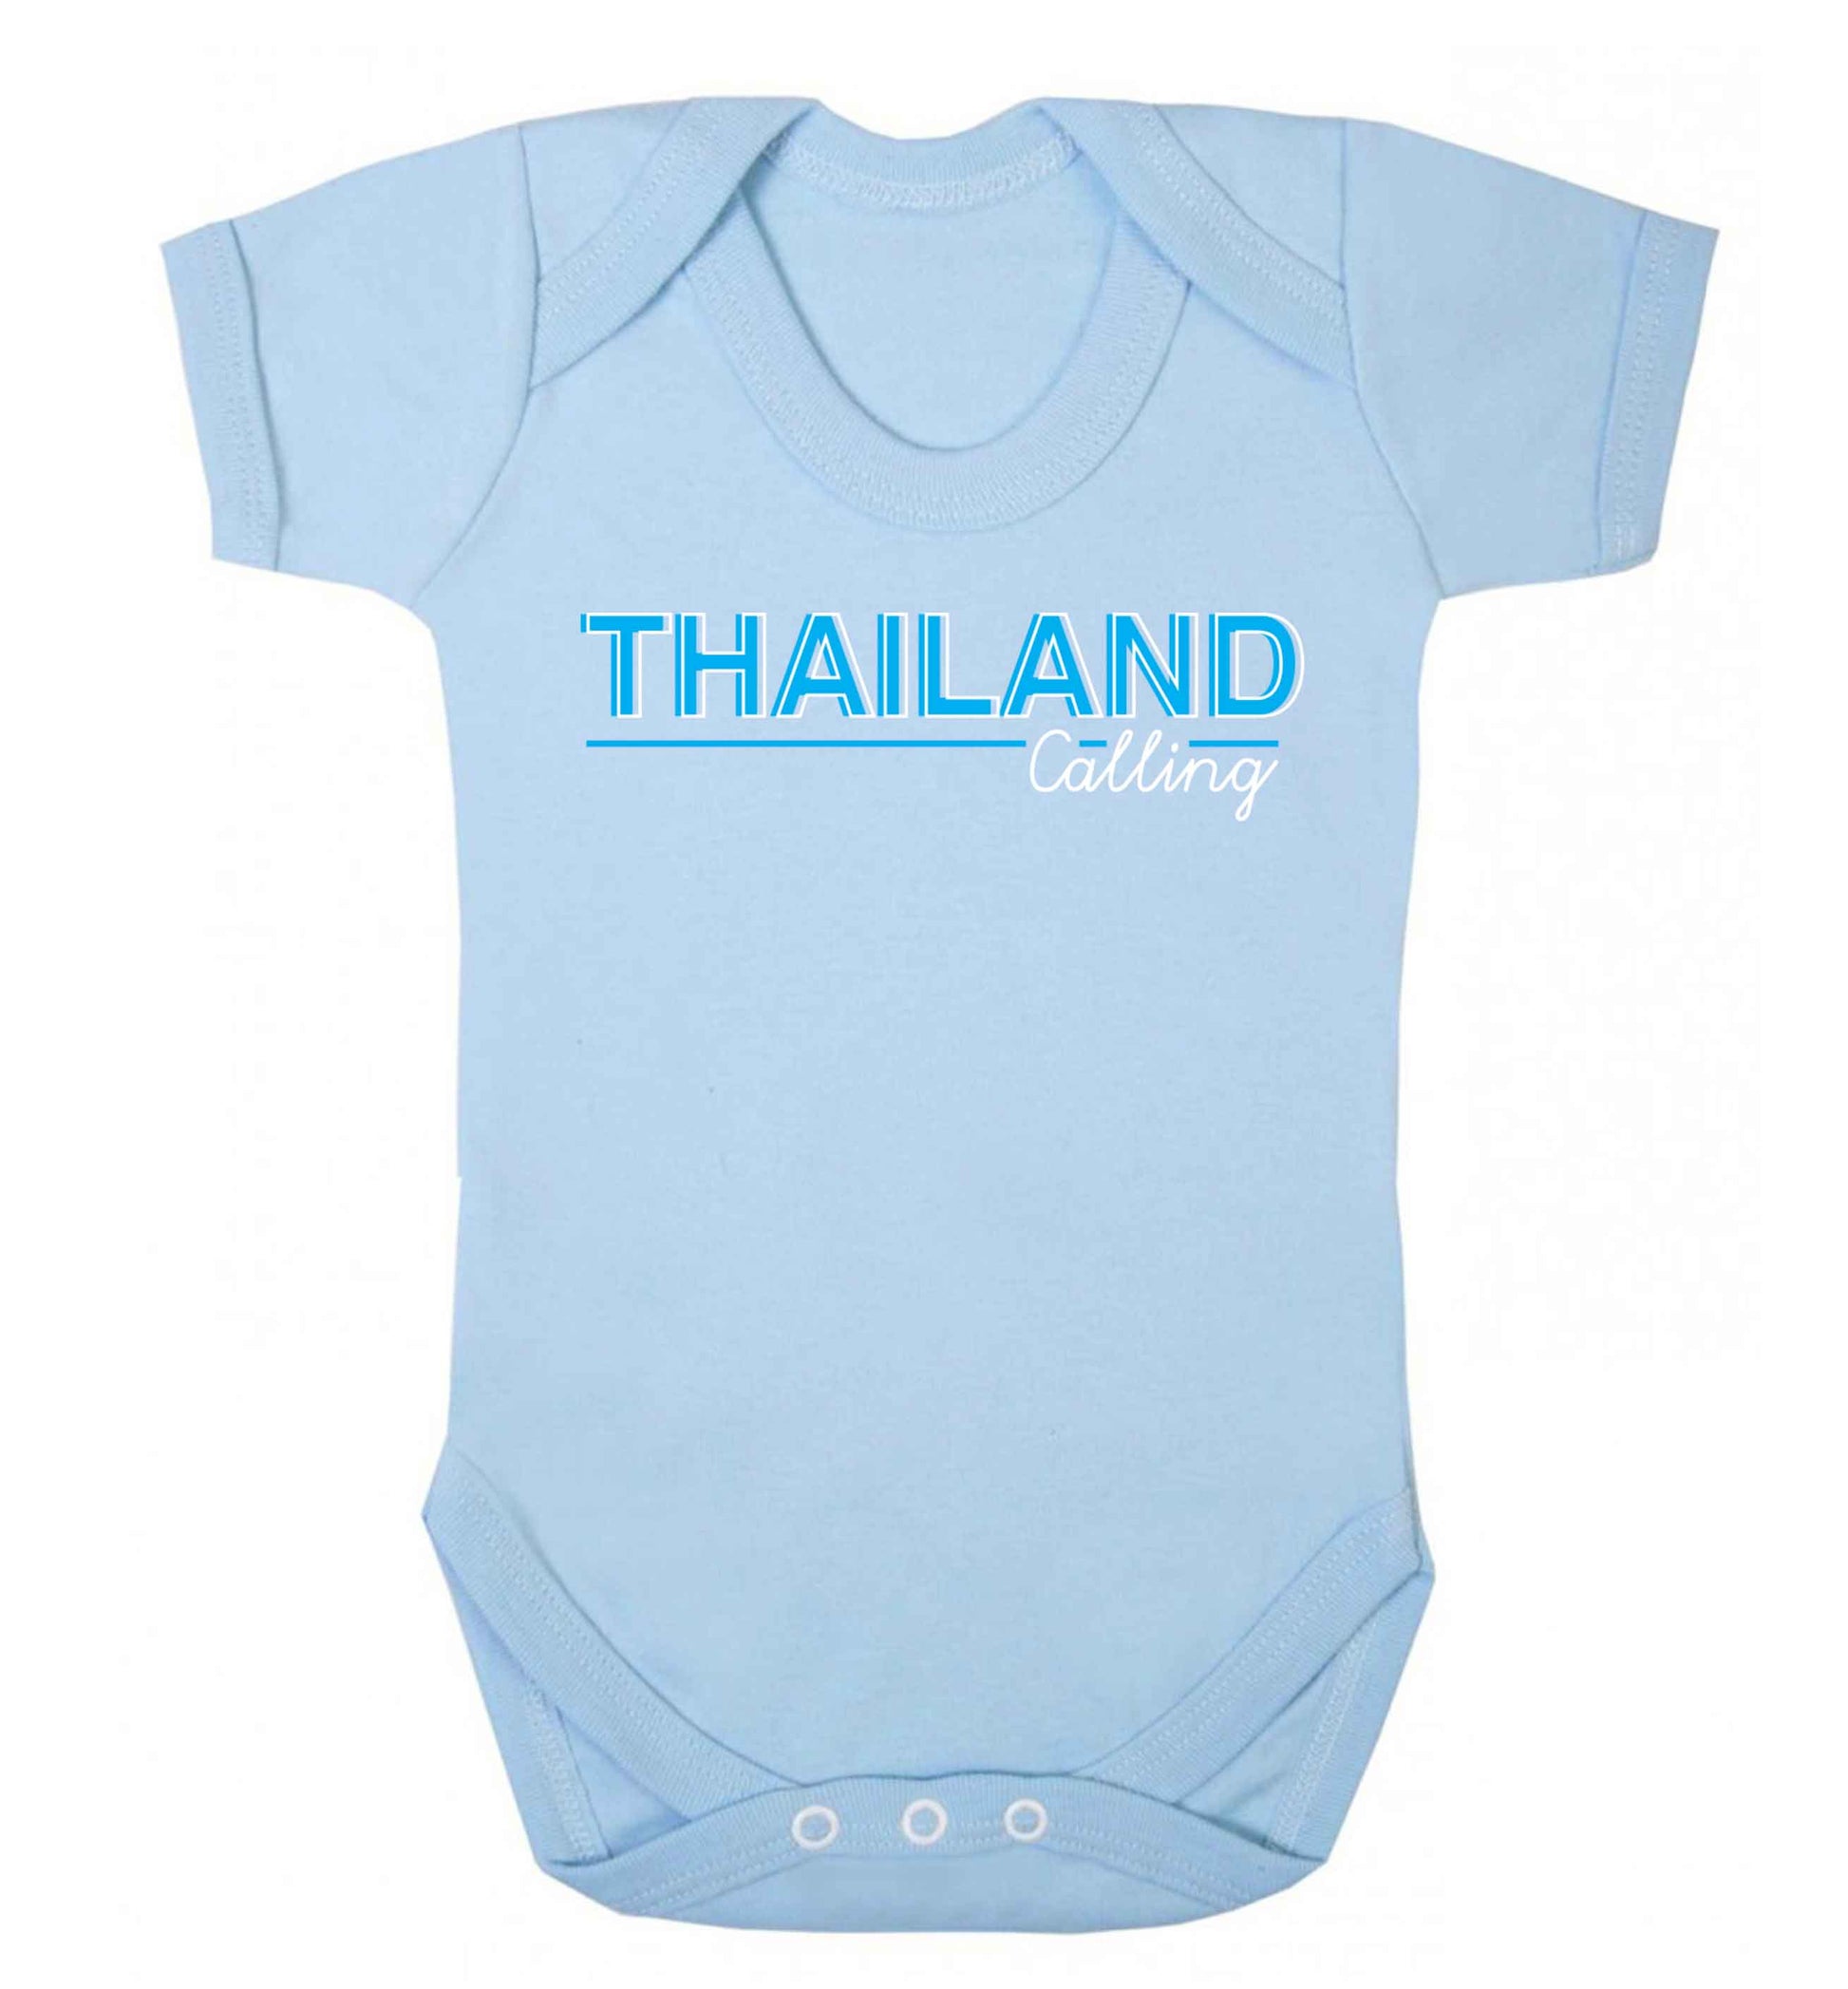 Thailand calling Baby Vest pale blue 18-24 months